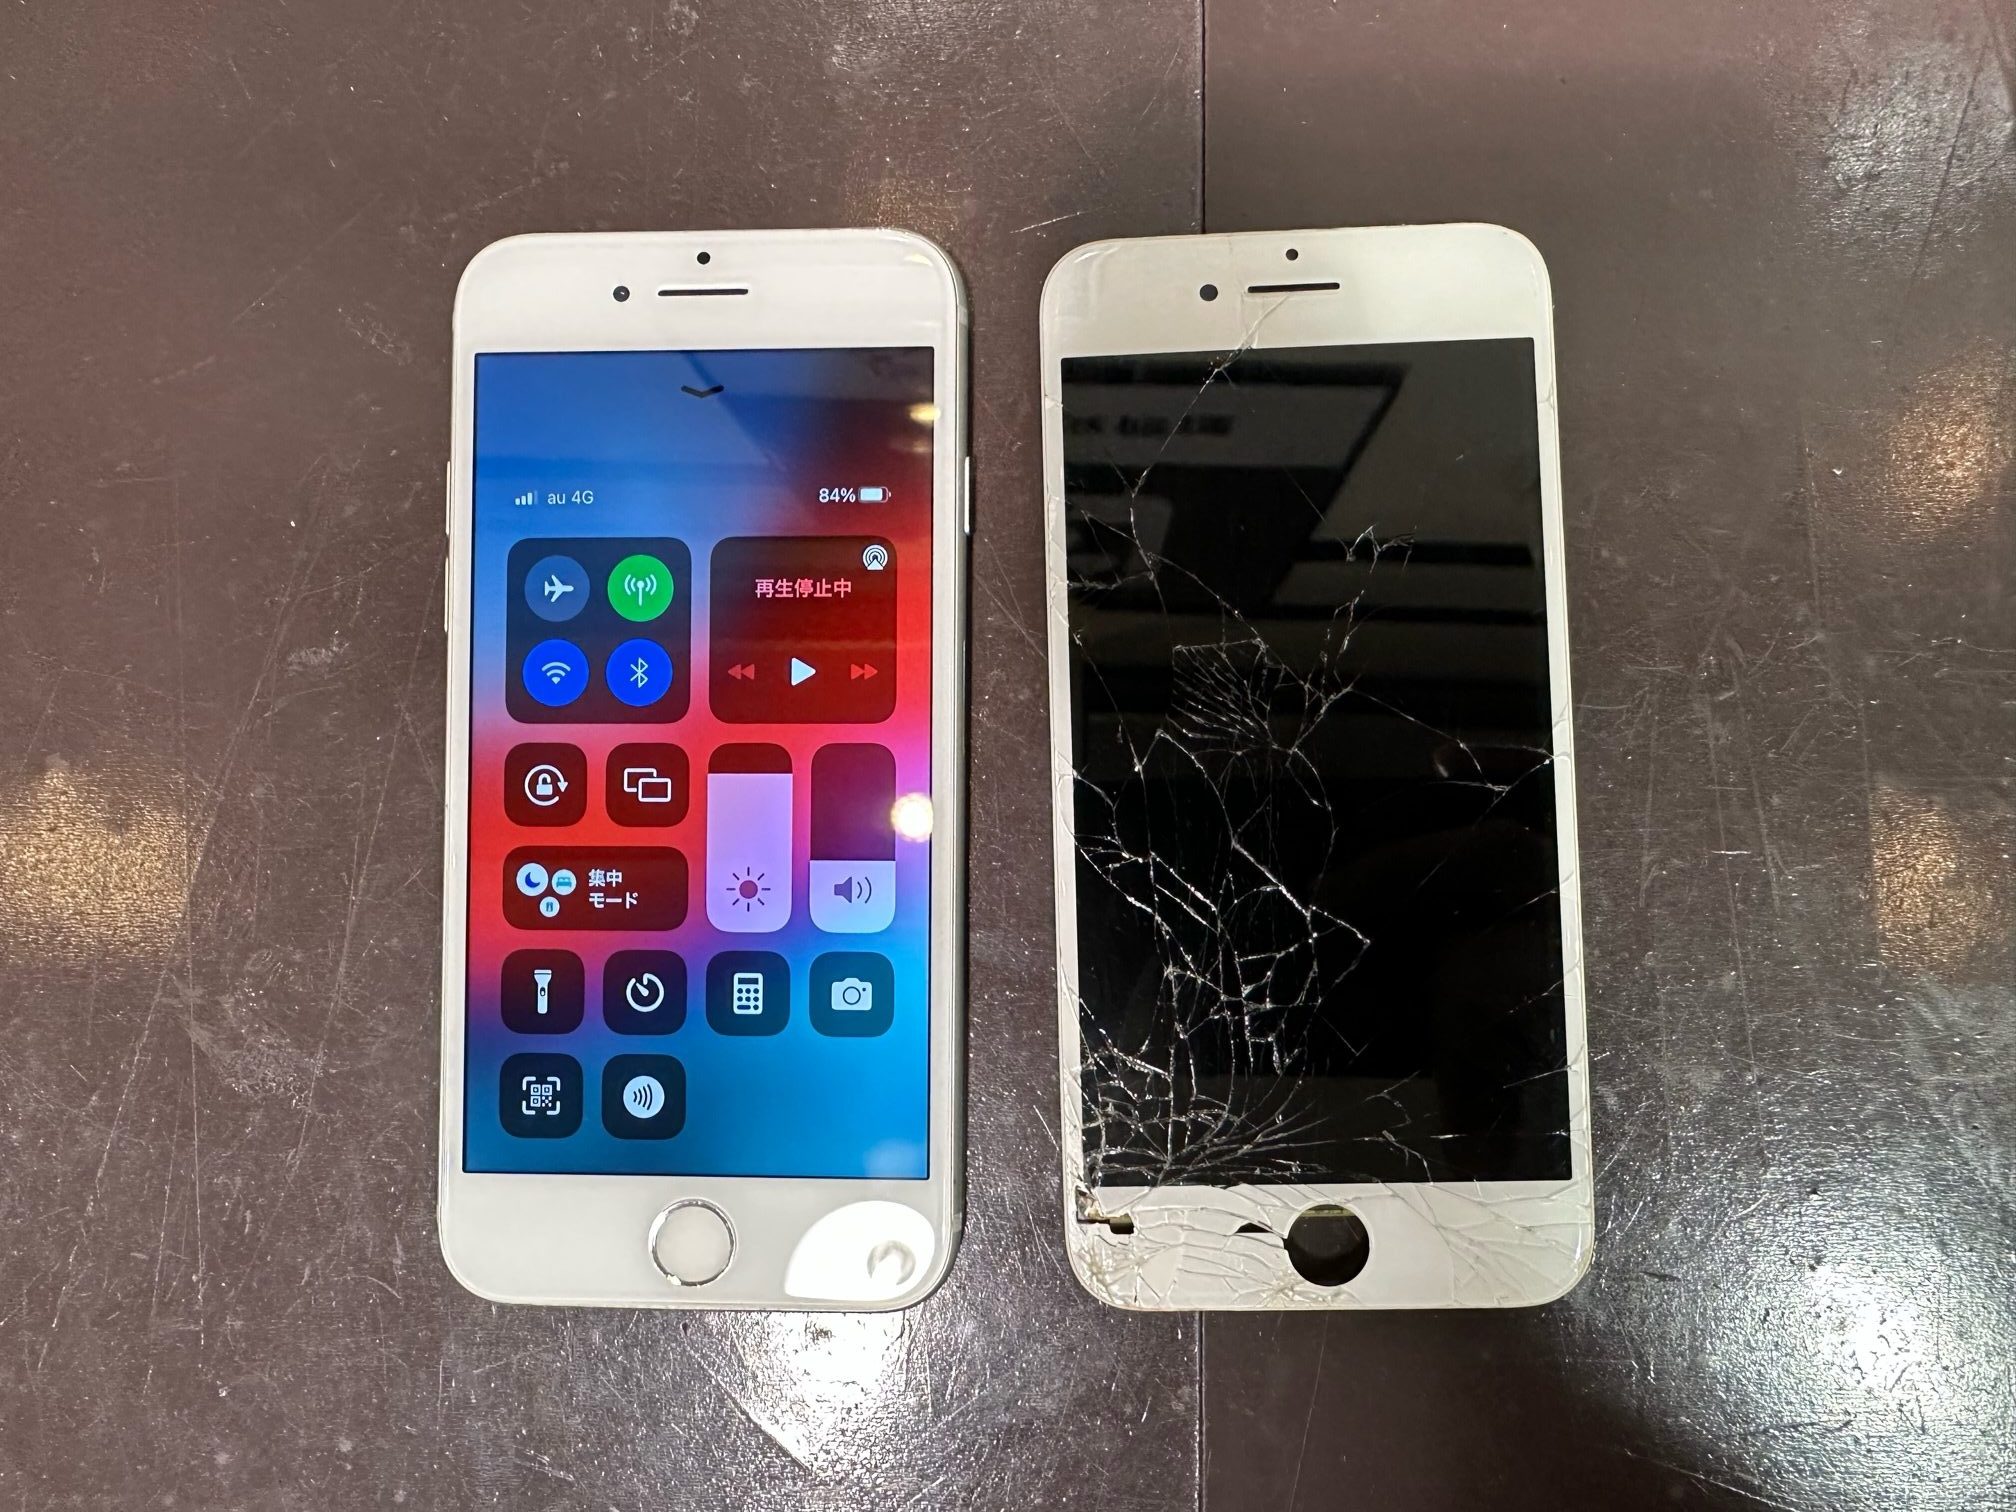 【iPhone 画面修理】全体的な画面割れも、スマートクールでは即日の修理可能です！慌てず、一度ご相談ください。｜iPhone 7 画面修理